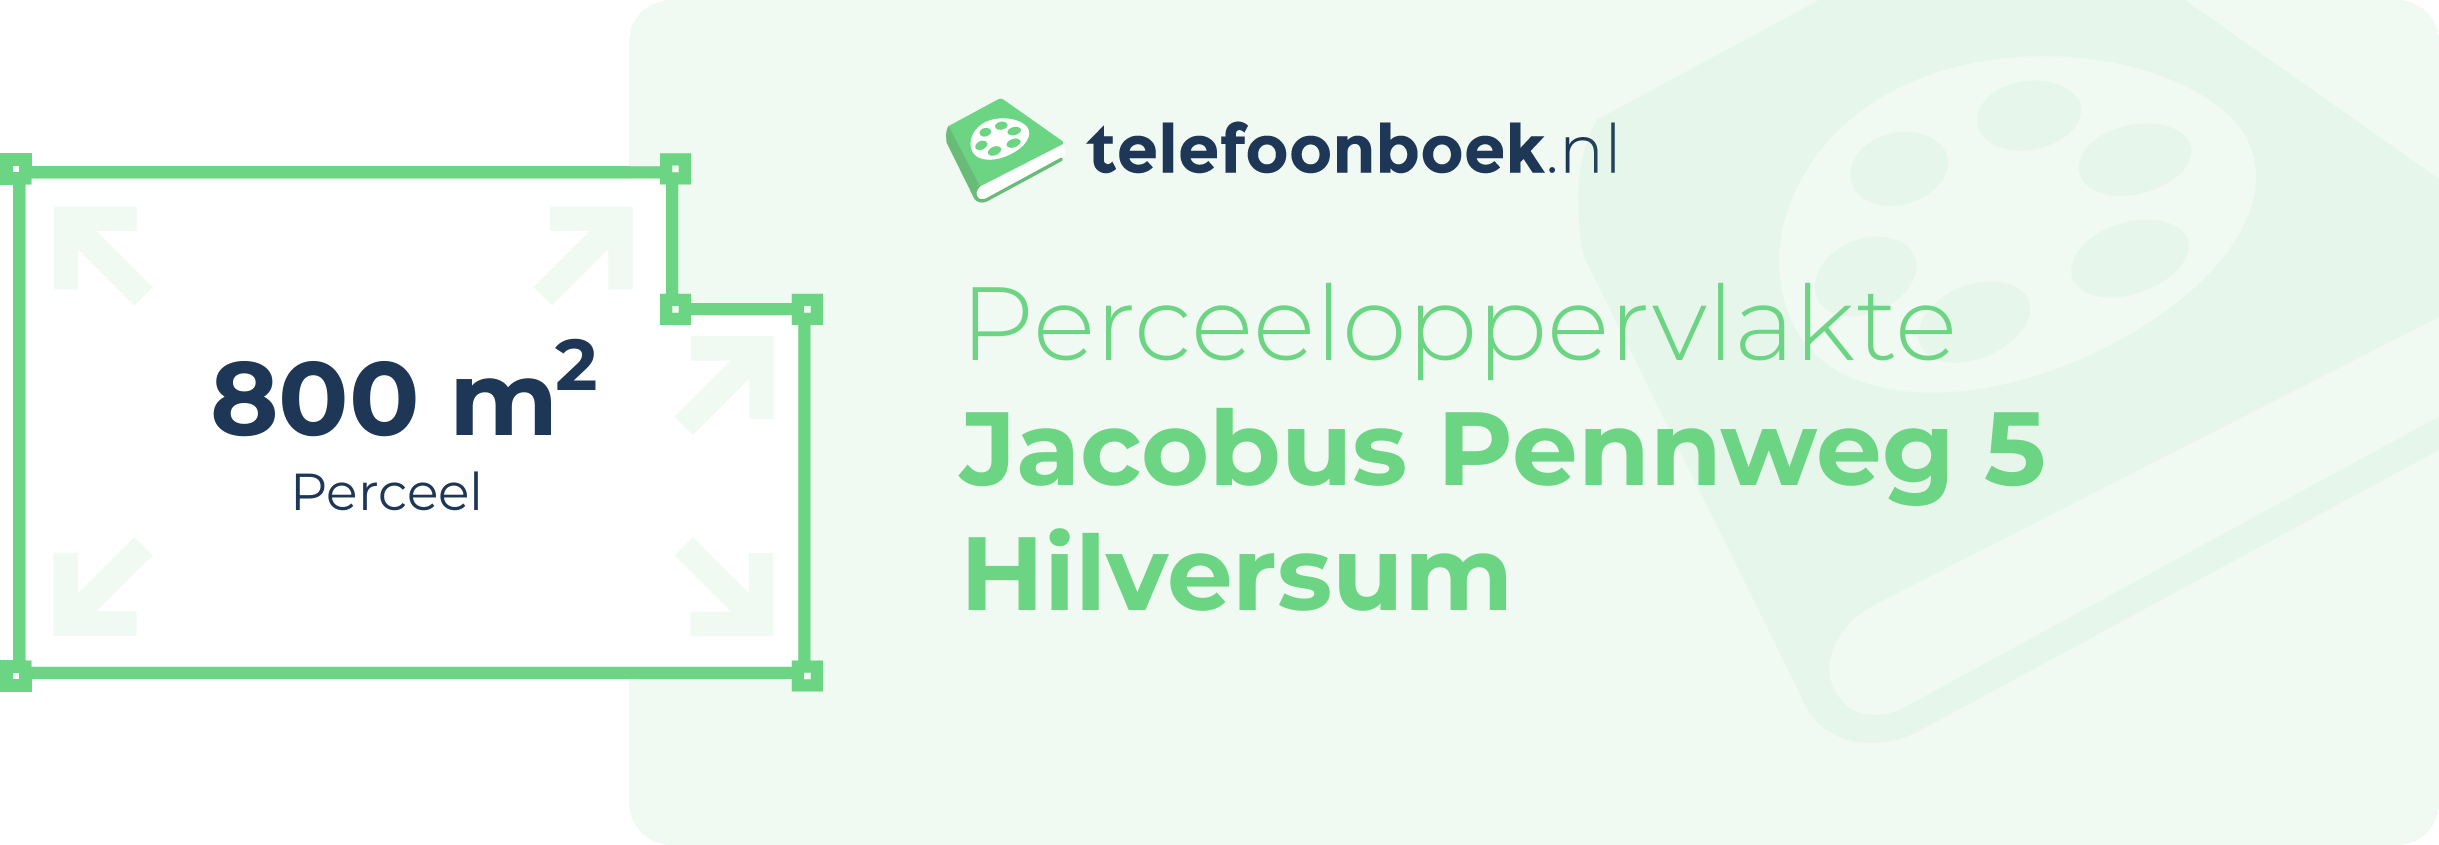 Perceeloppervlakte Jacobus Pennweg 5 Hilversum